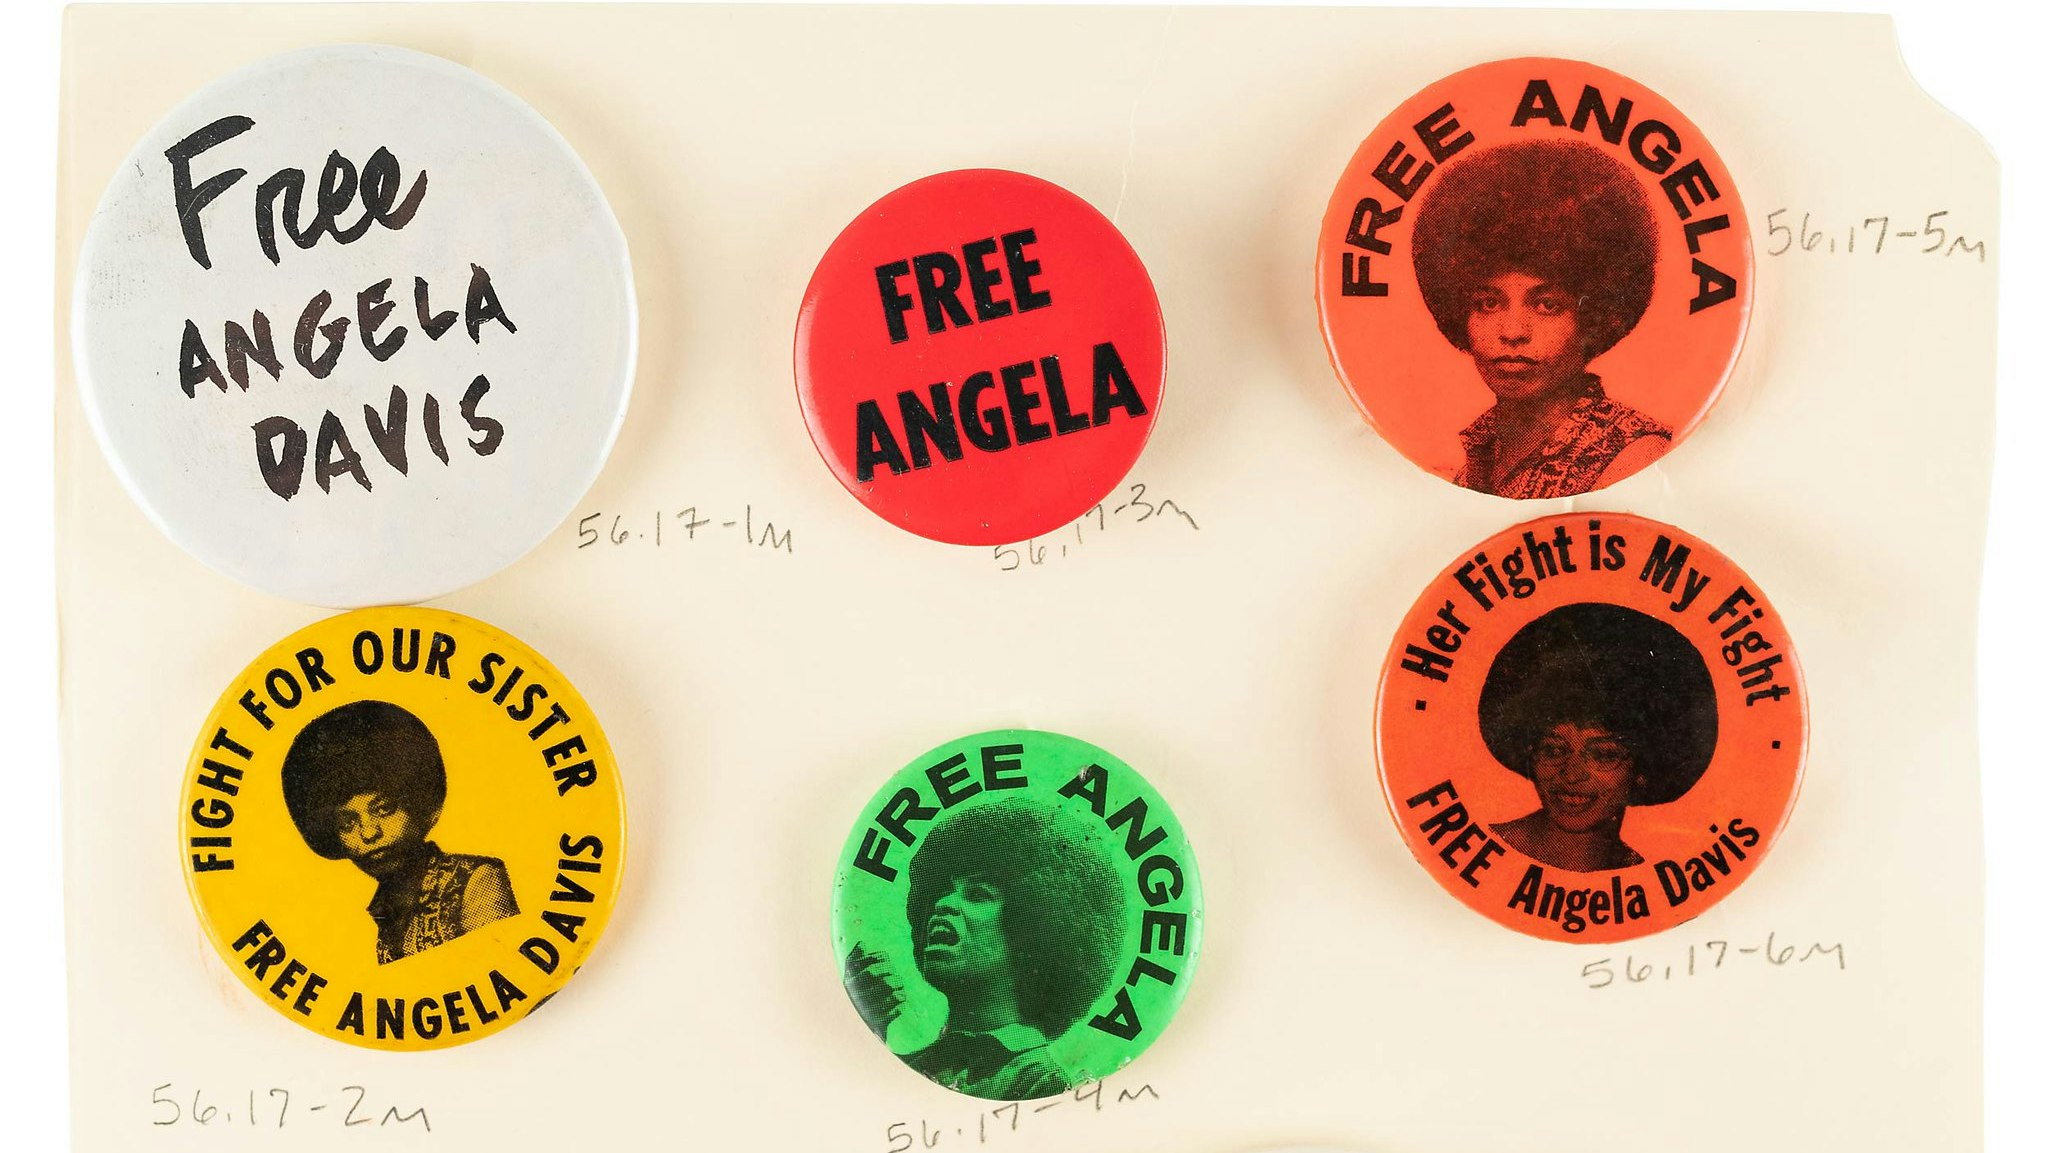 "Free Angela" and "Free Angela Davis" buttons.